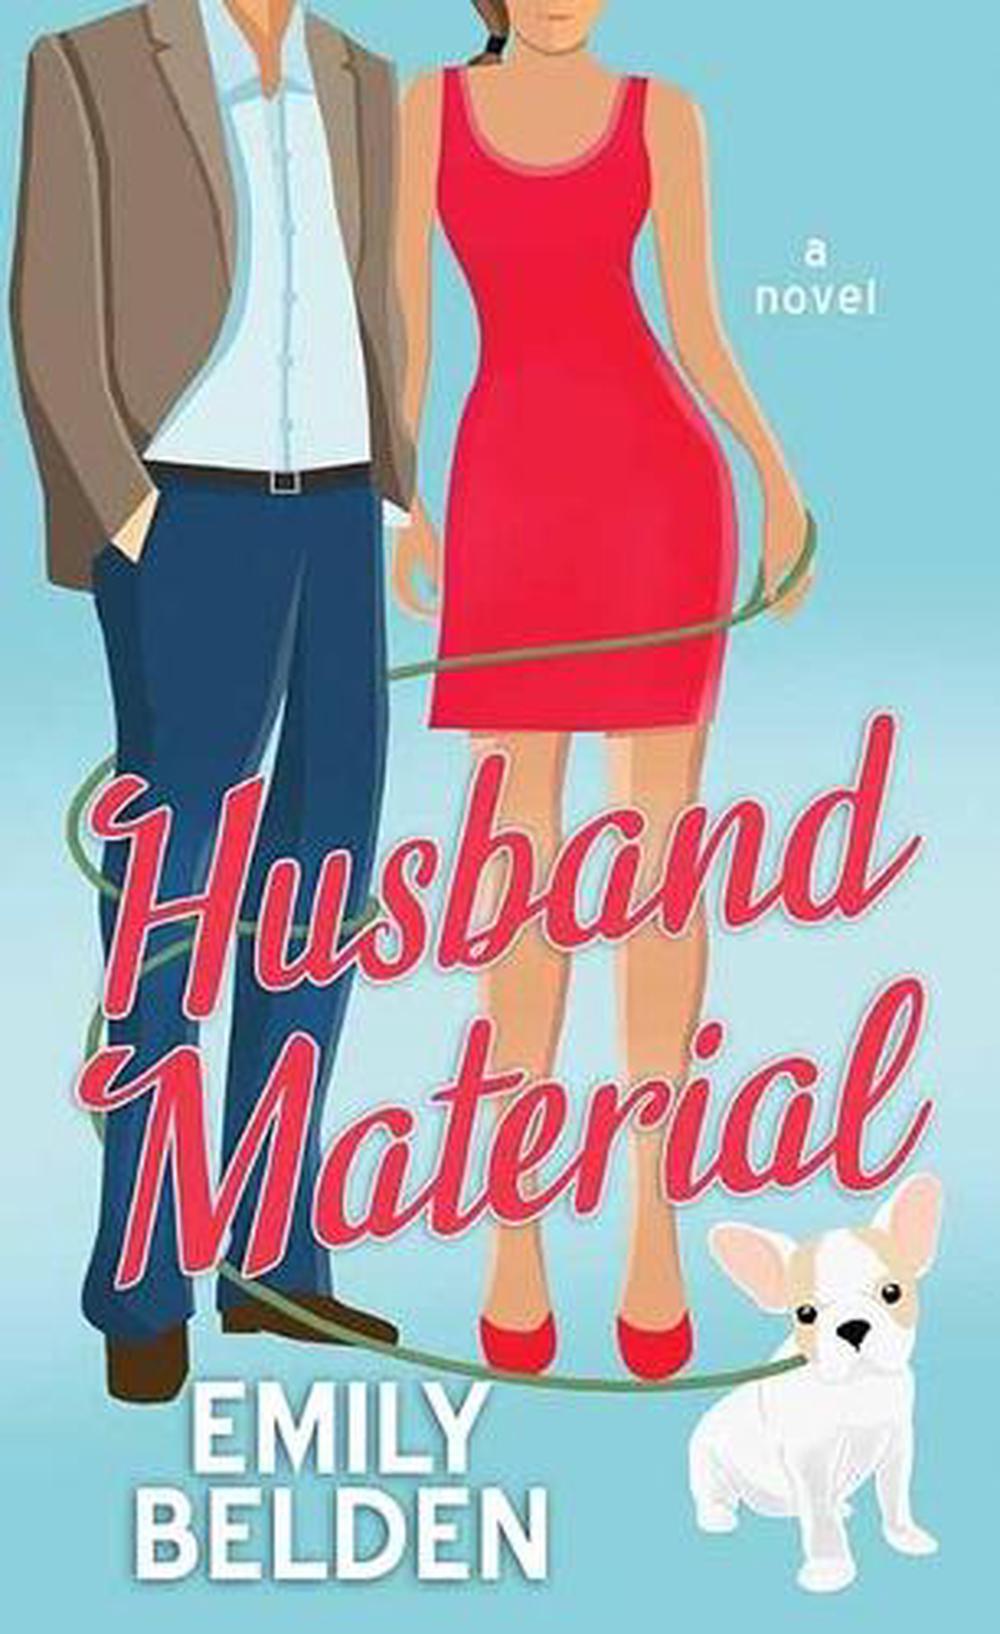 husband material book review